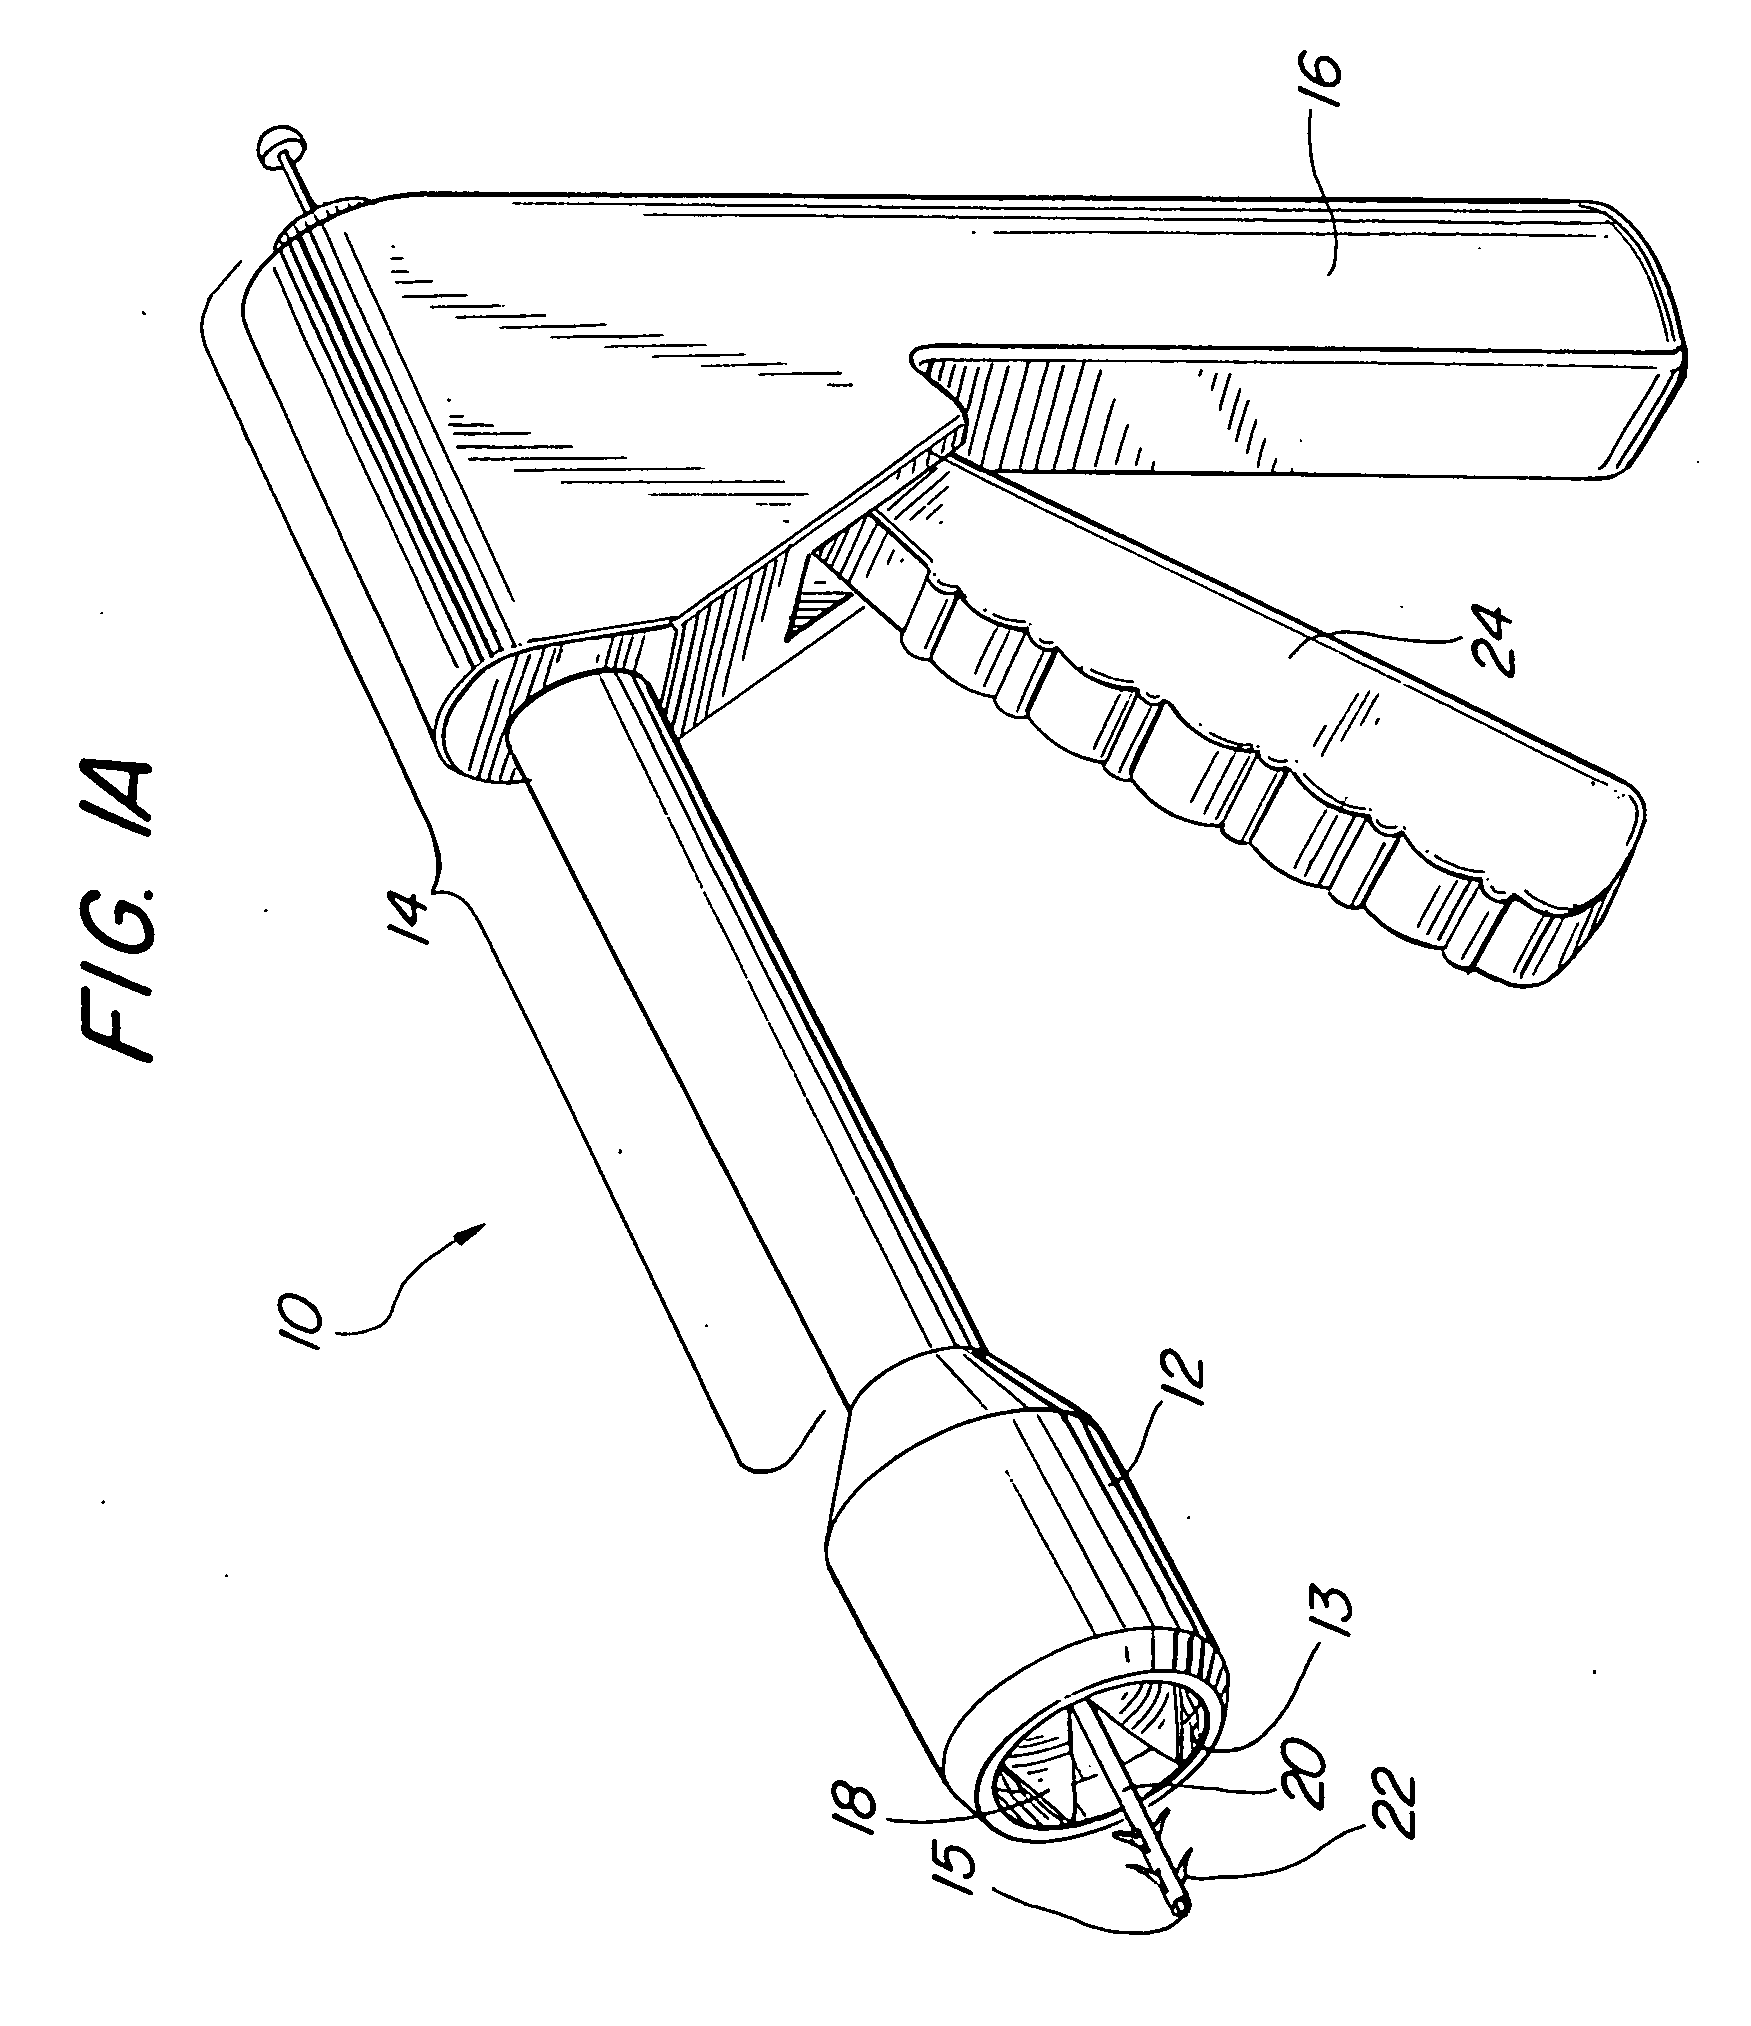 Cervical conization device